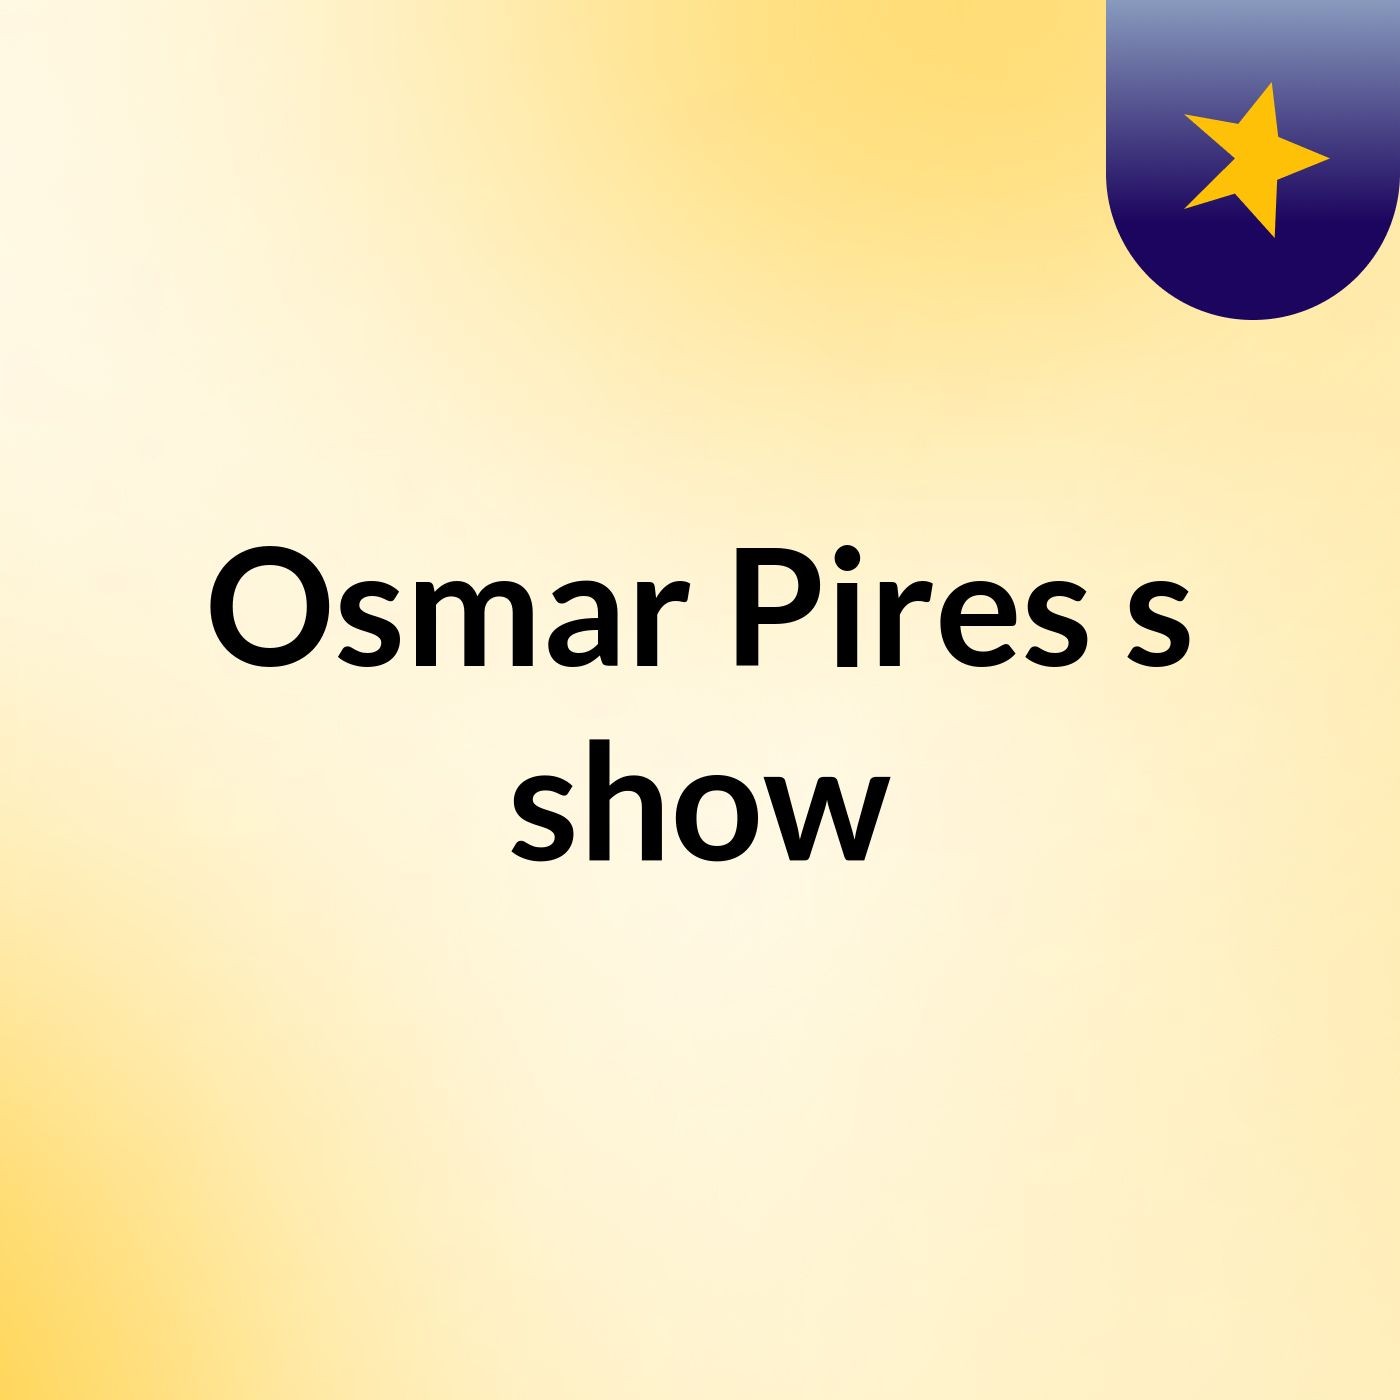 Osmar Pires's show